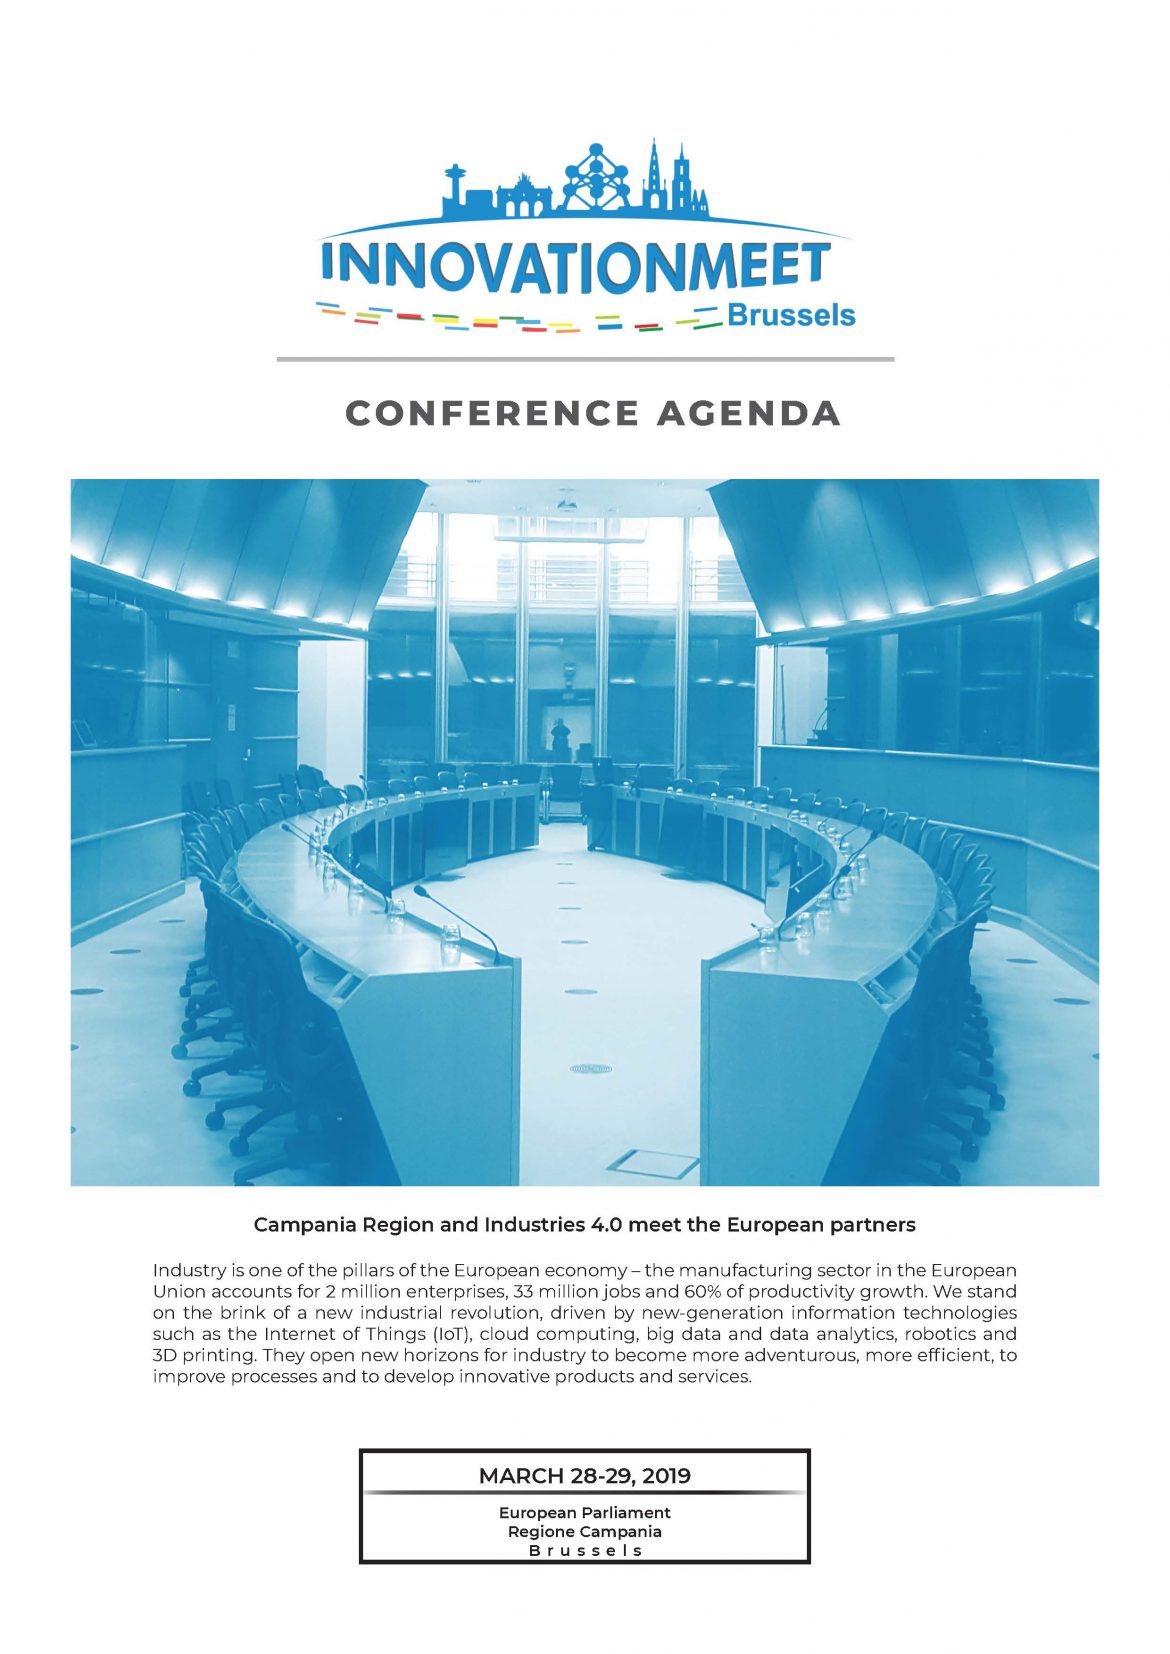 Conferenza “Innovationmeet Brussels”.